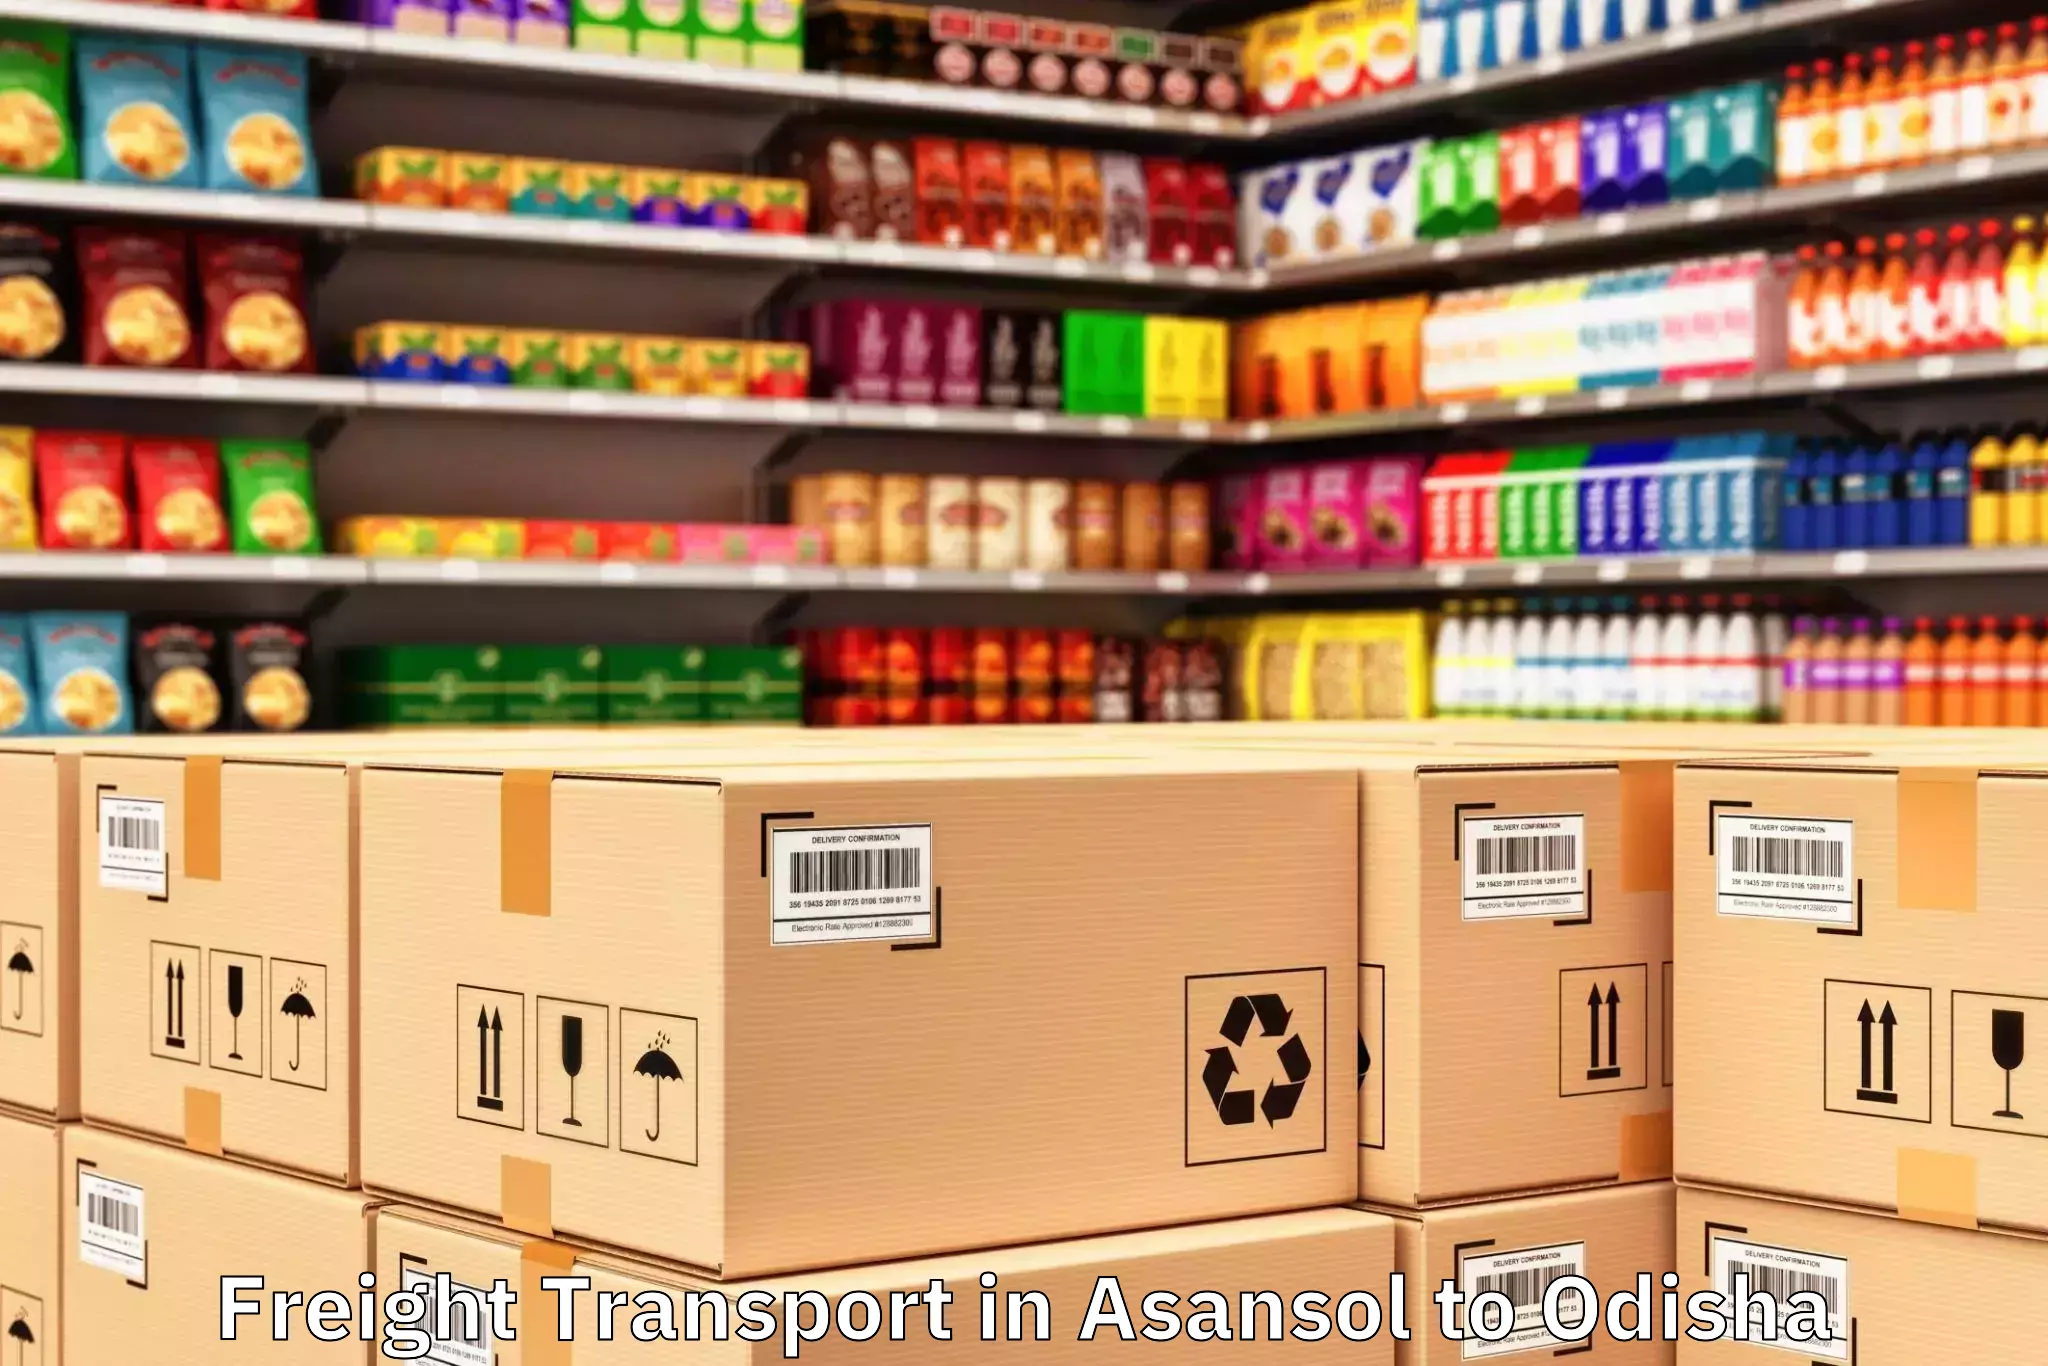 Professional Asansol to Kalinganagar Freight Transport